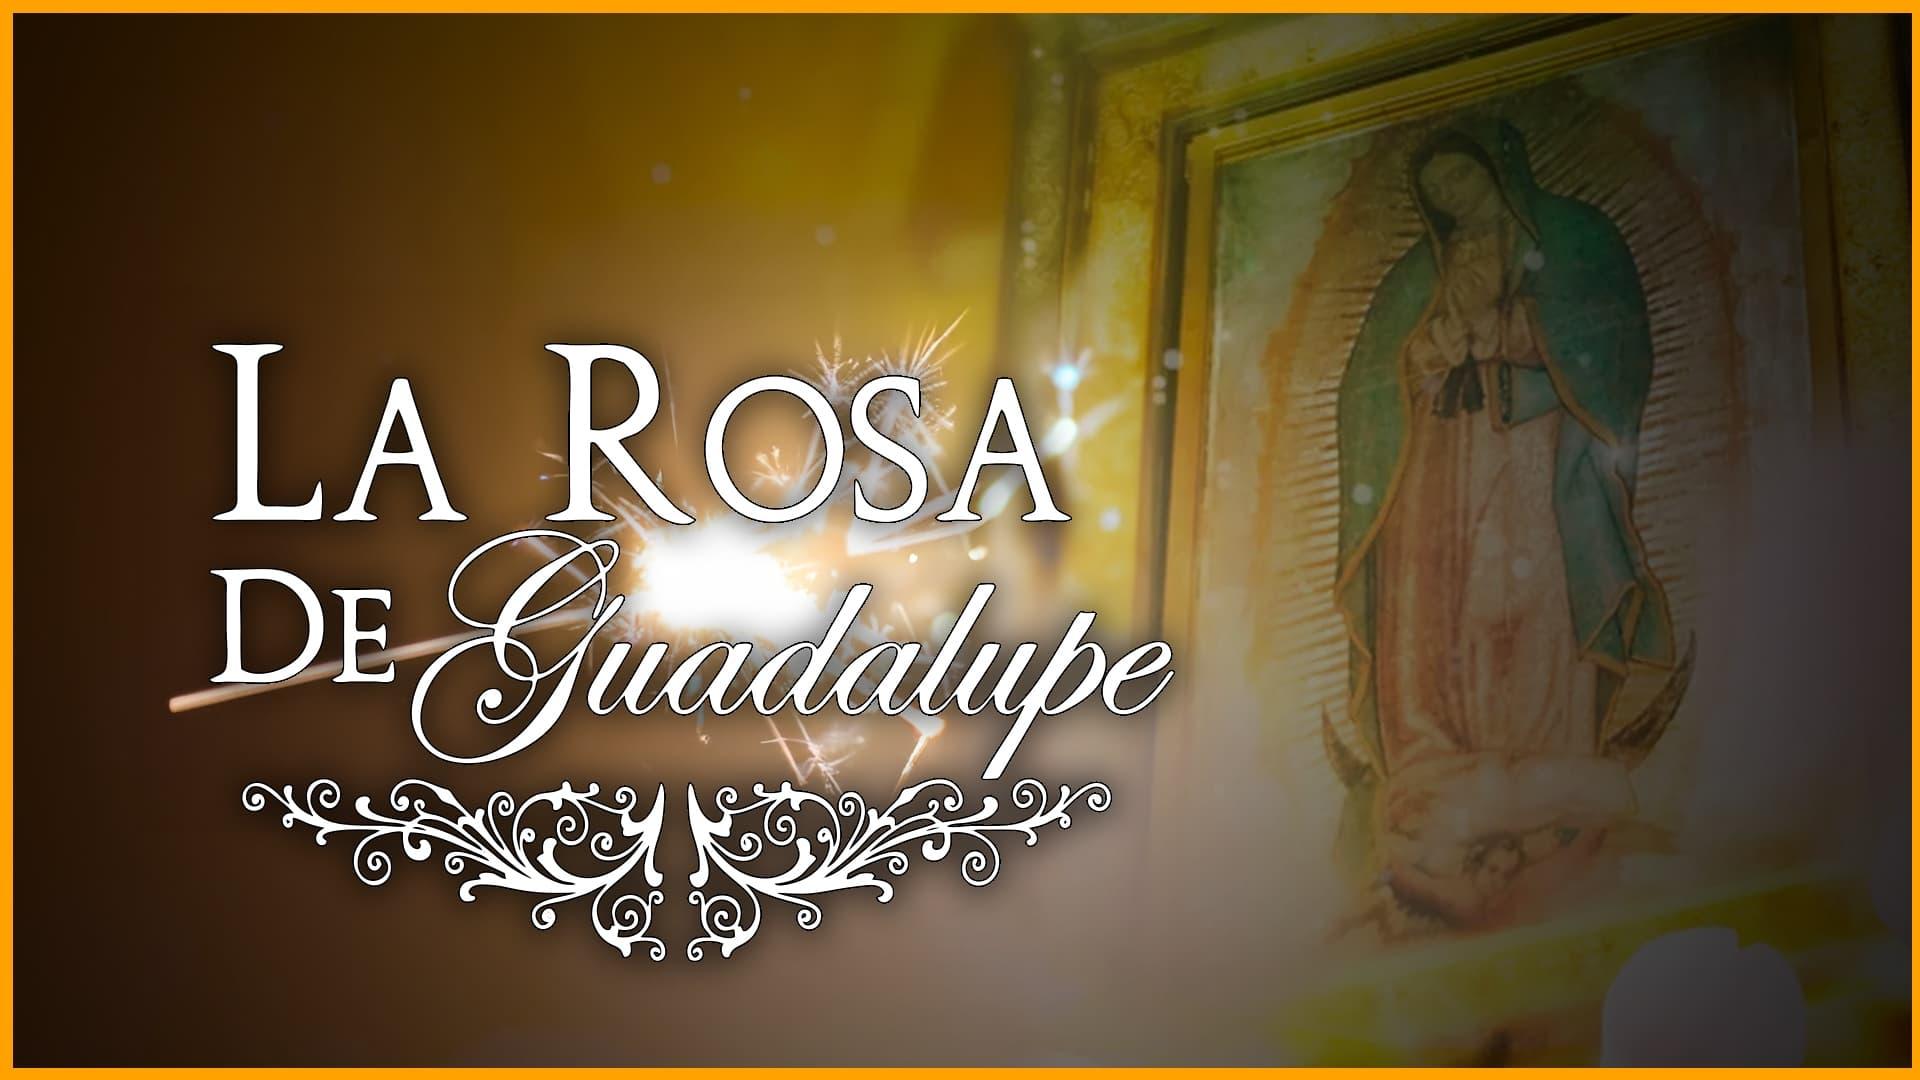 La rosa de Guadalupe backdrop